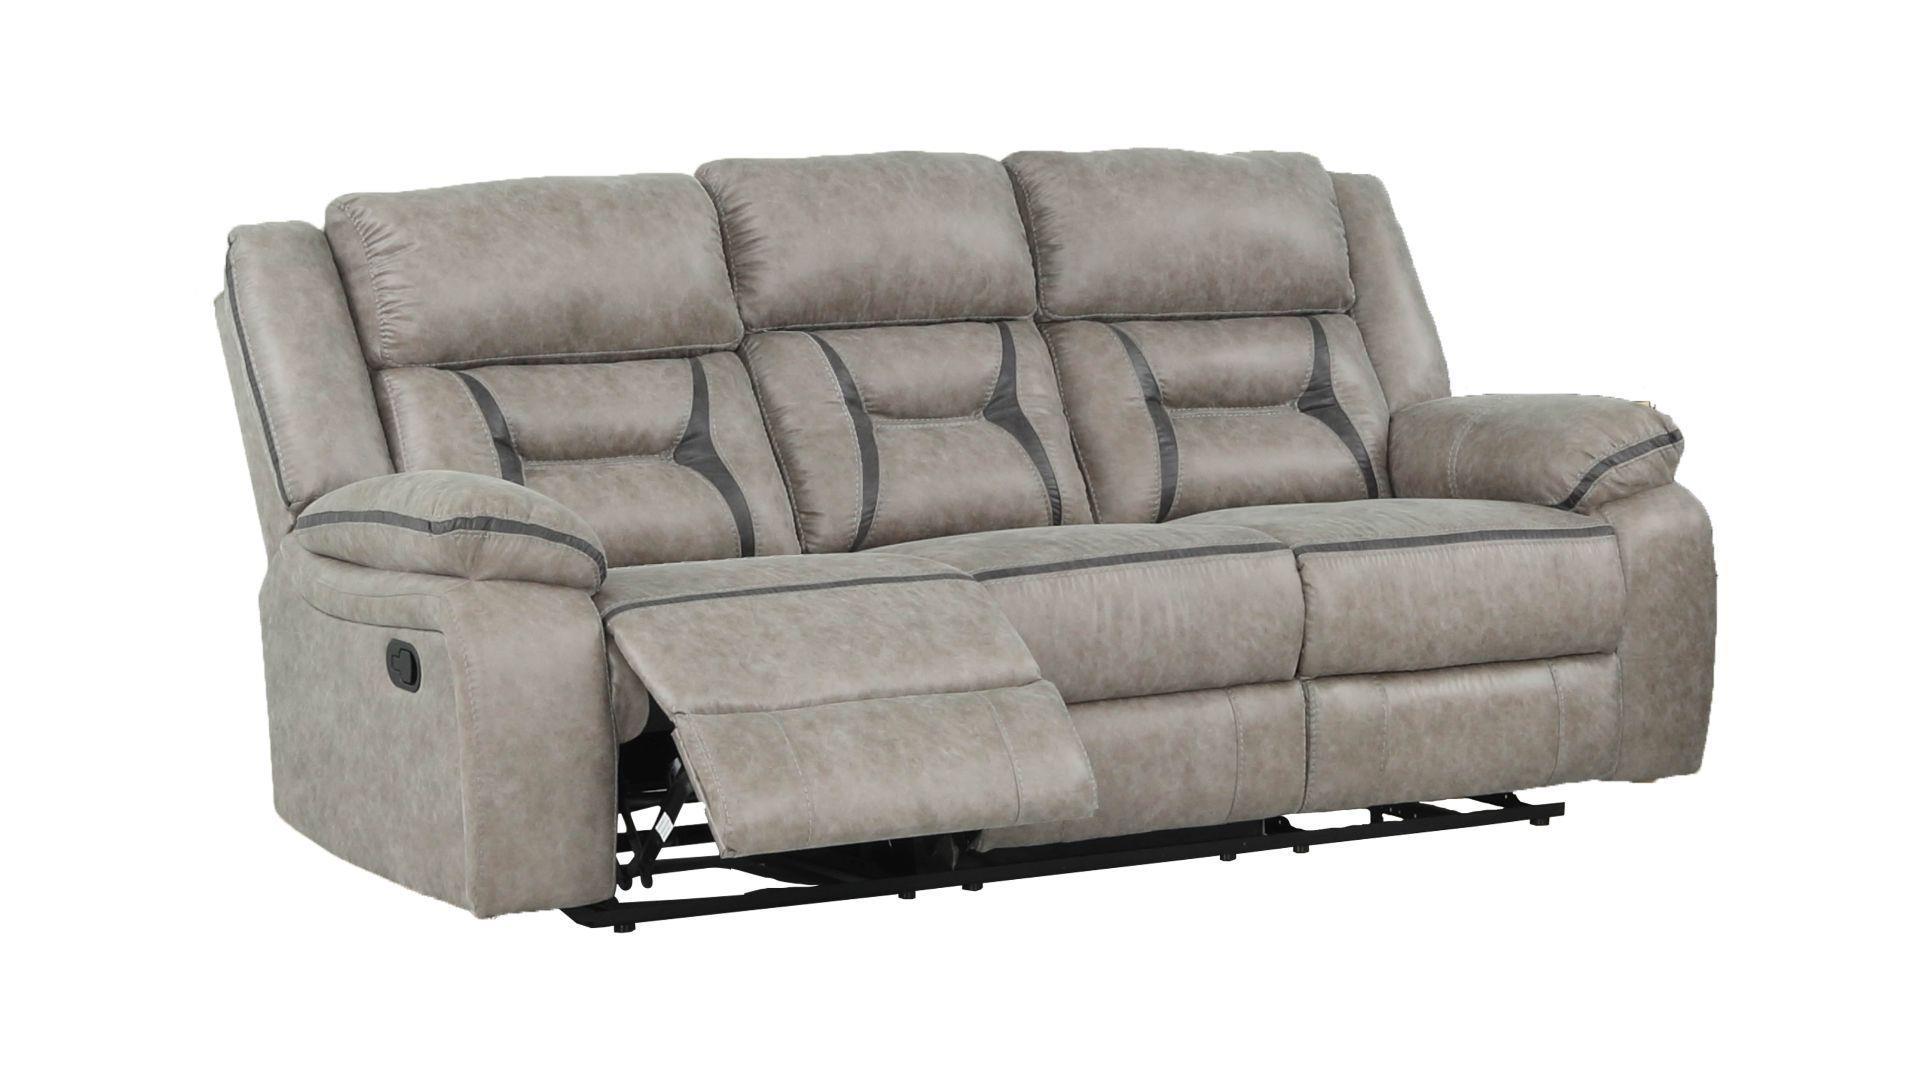 Contemporary, Modern Recliner Sofa DENALI DENALI-S in Gray Faux Leather